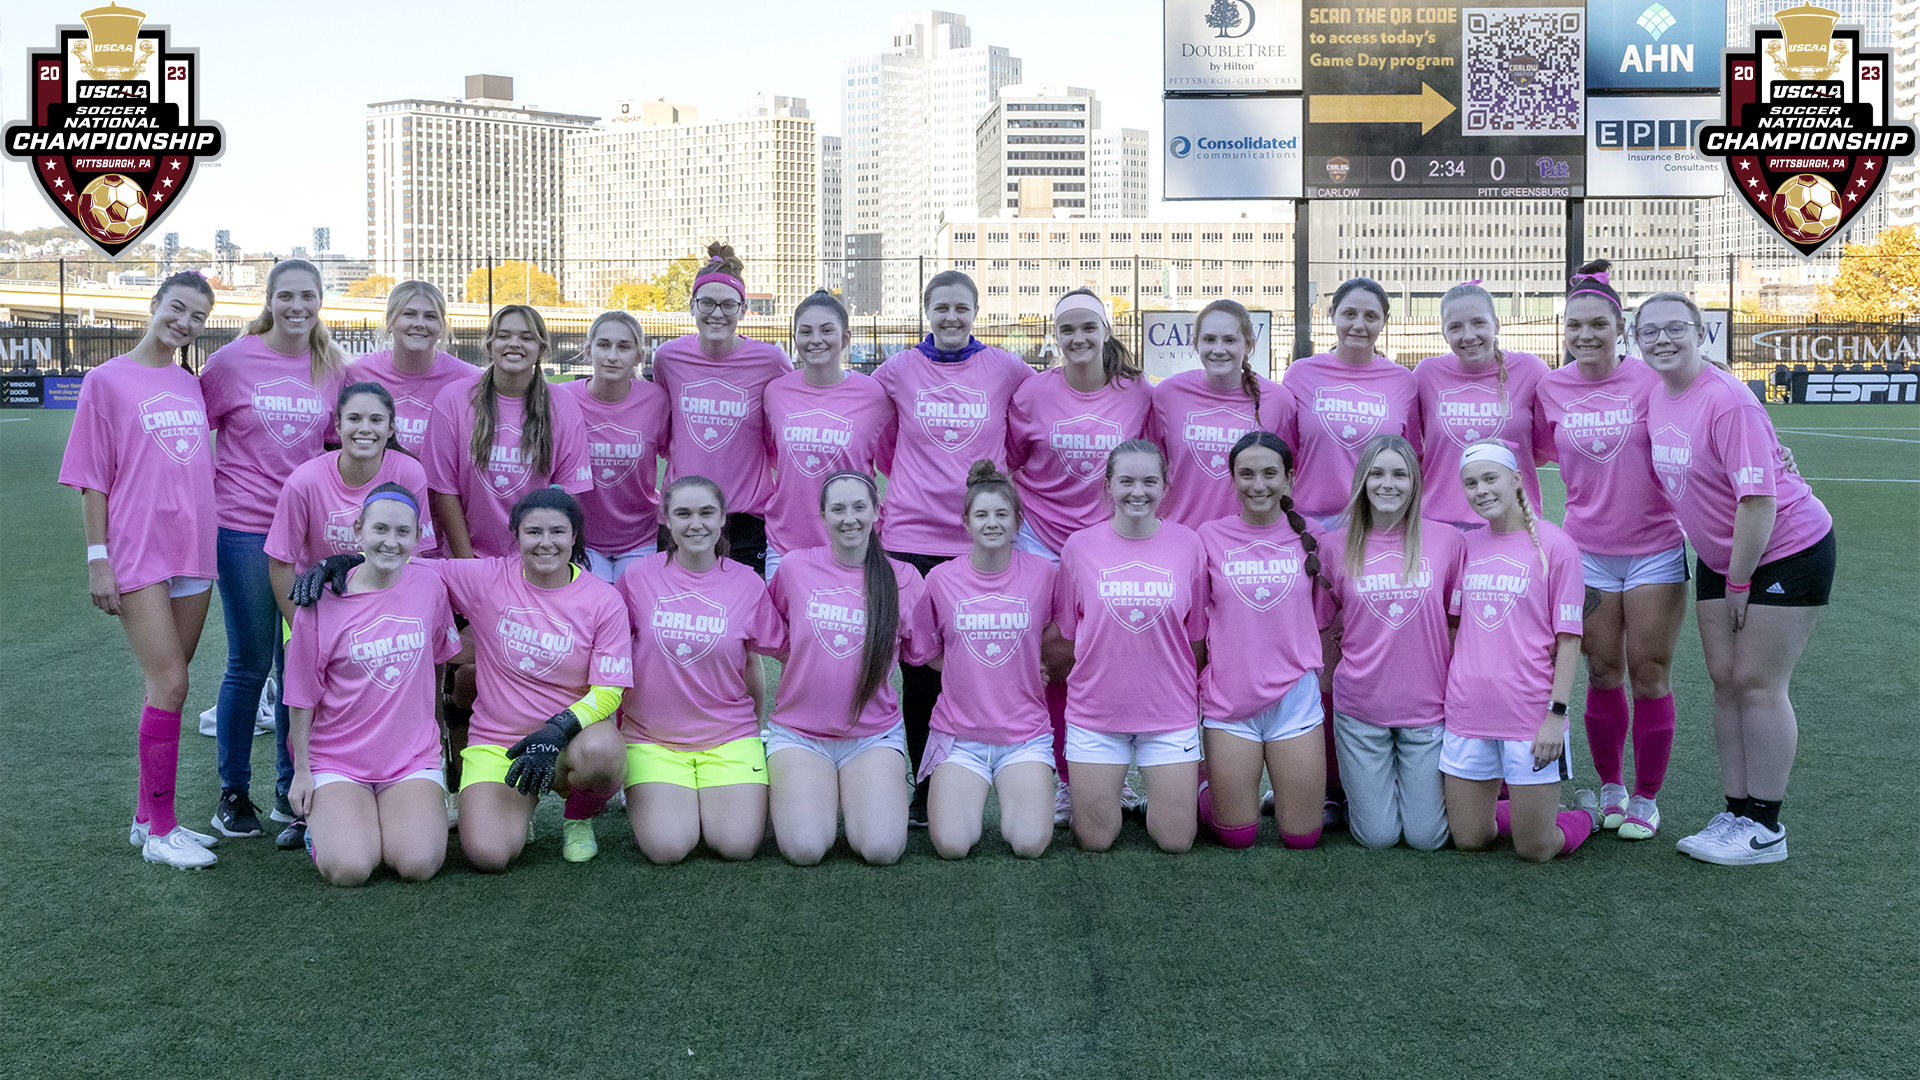 The 2023 women’s soccer team. Photo by Robert Cifone.